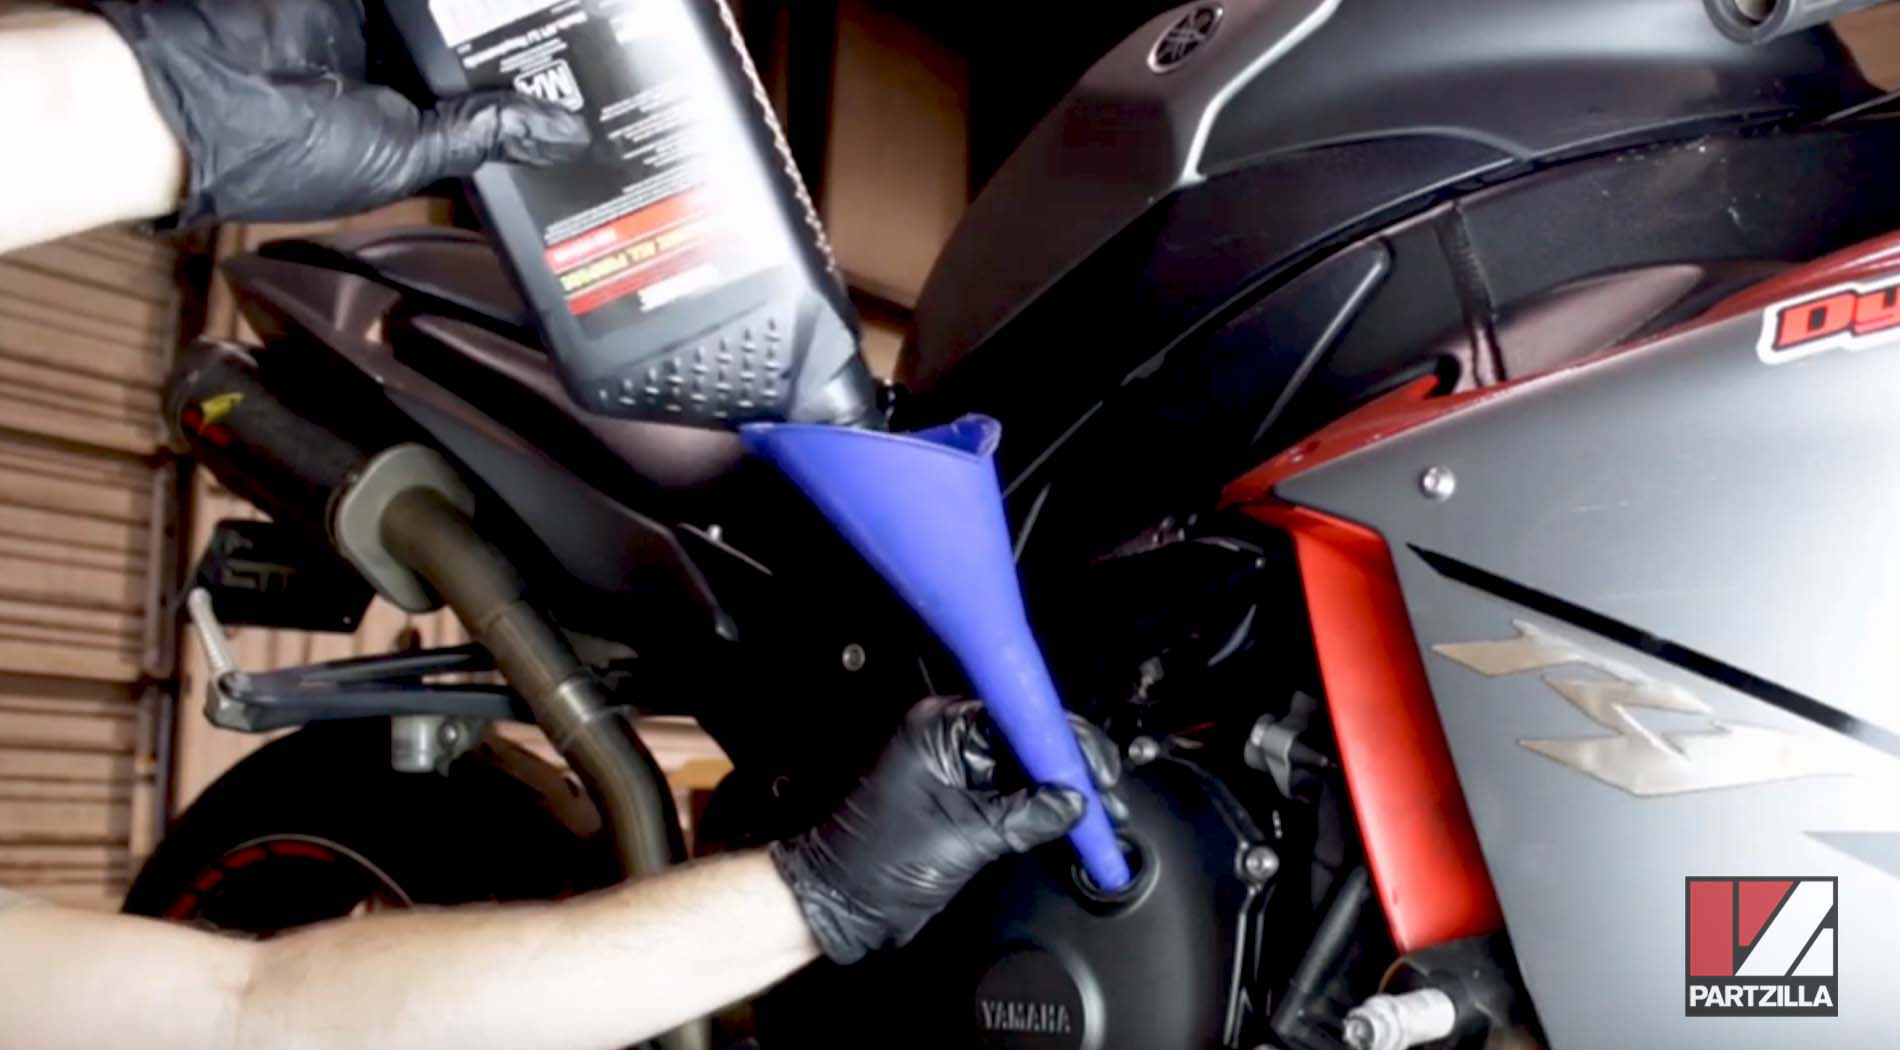 Yamaha R1 motorcycle oil change service